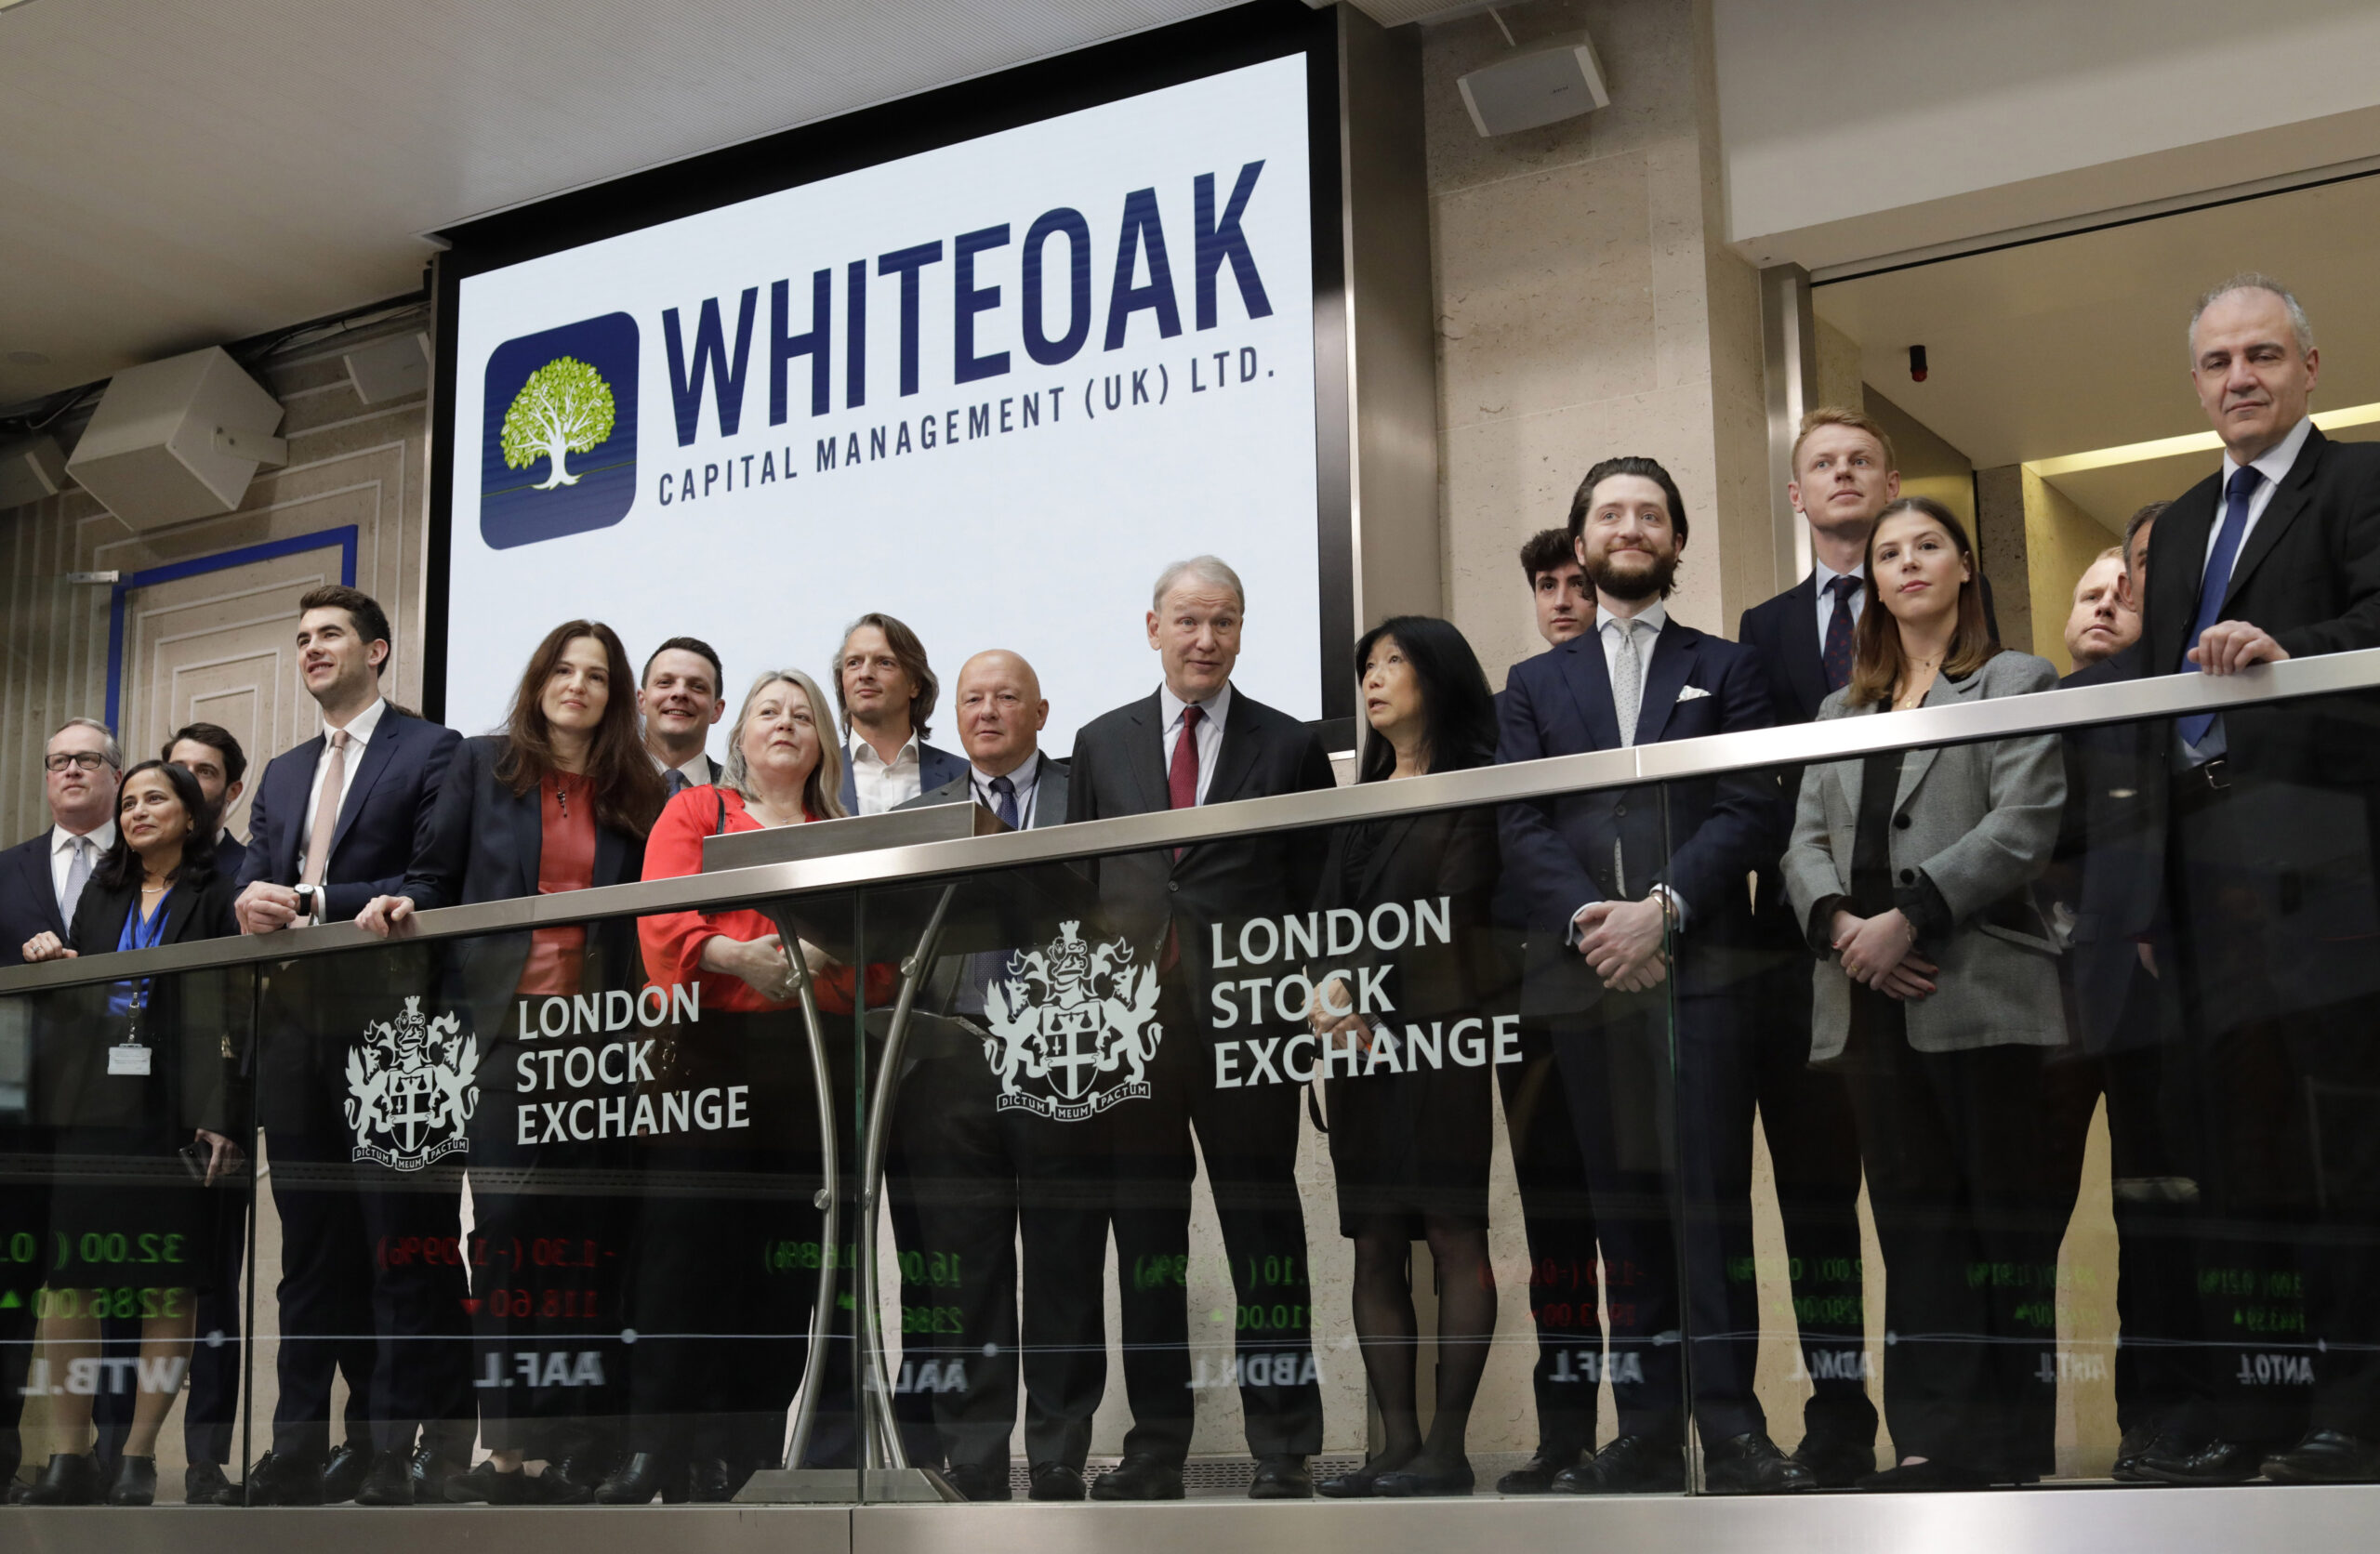 Ashoka WhiteOak Emerging Markets plc joins the Main Market